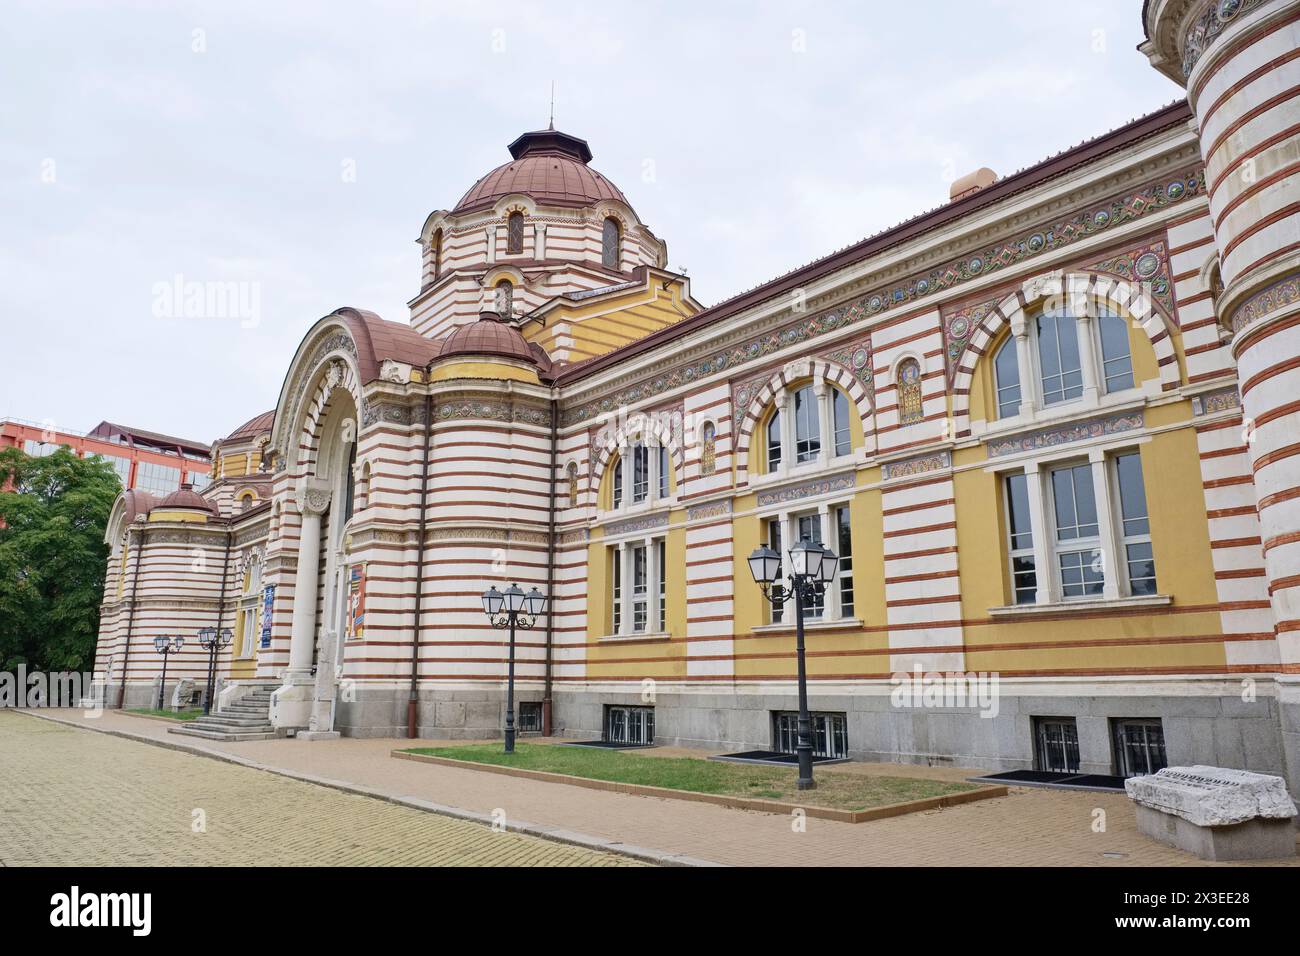 Bulgarien, Sofia; Blick auf das alte Thermalbadegebäude, heute ein Museum Stockfoto